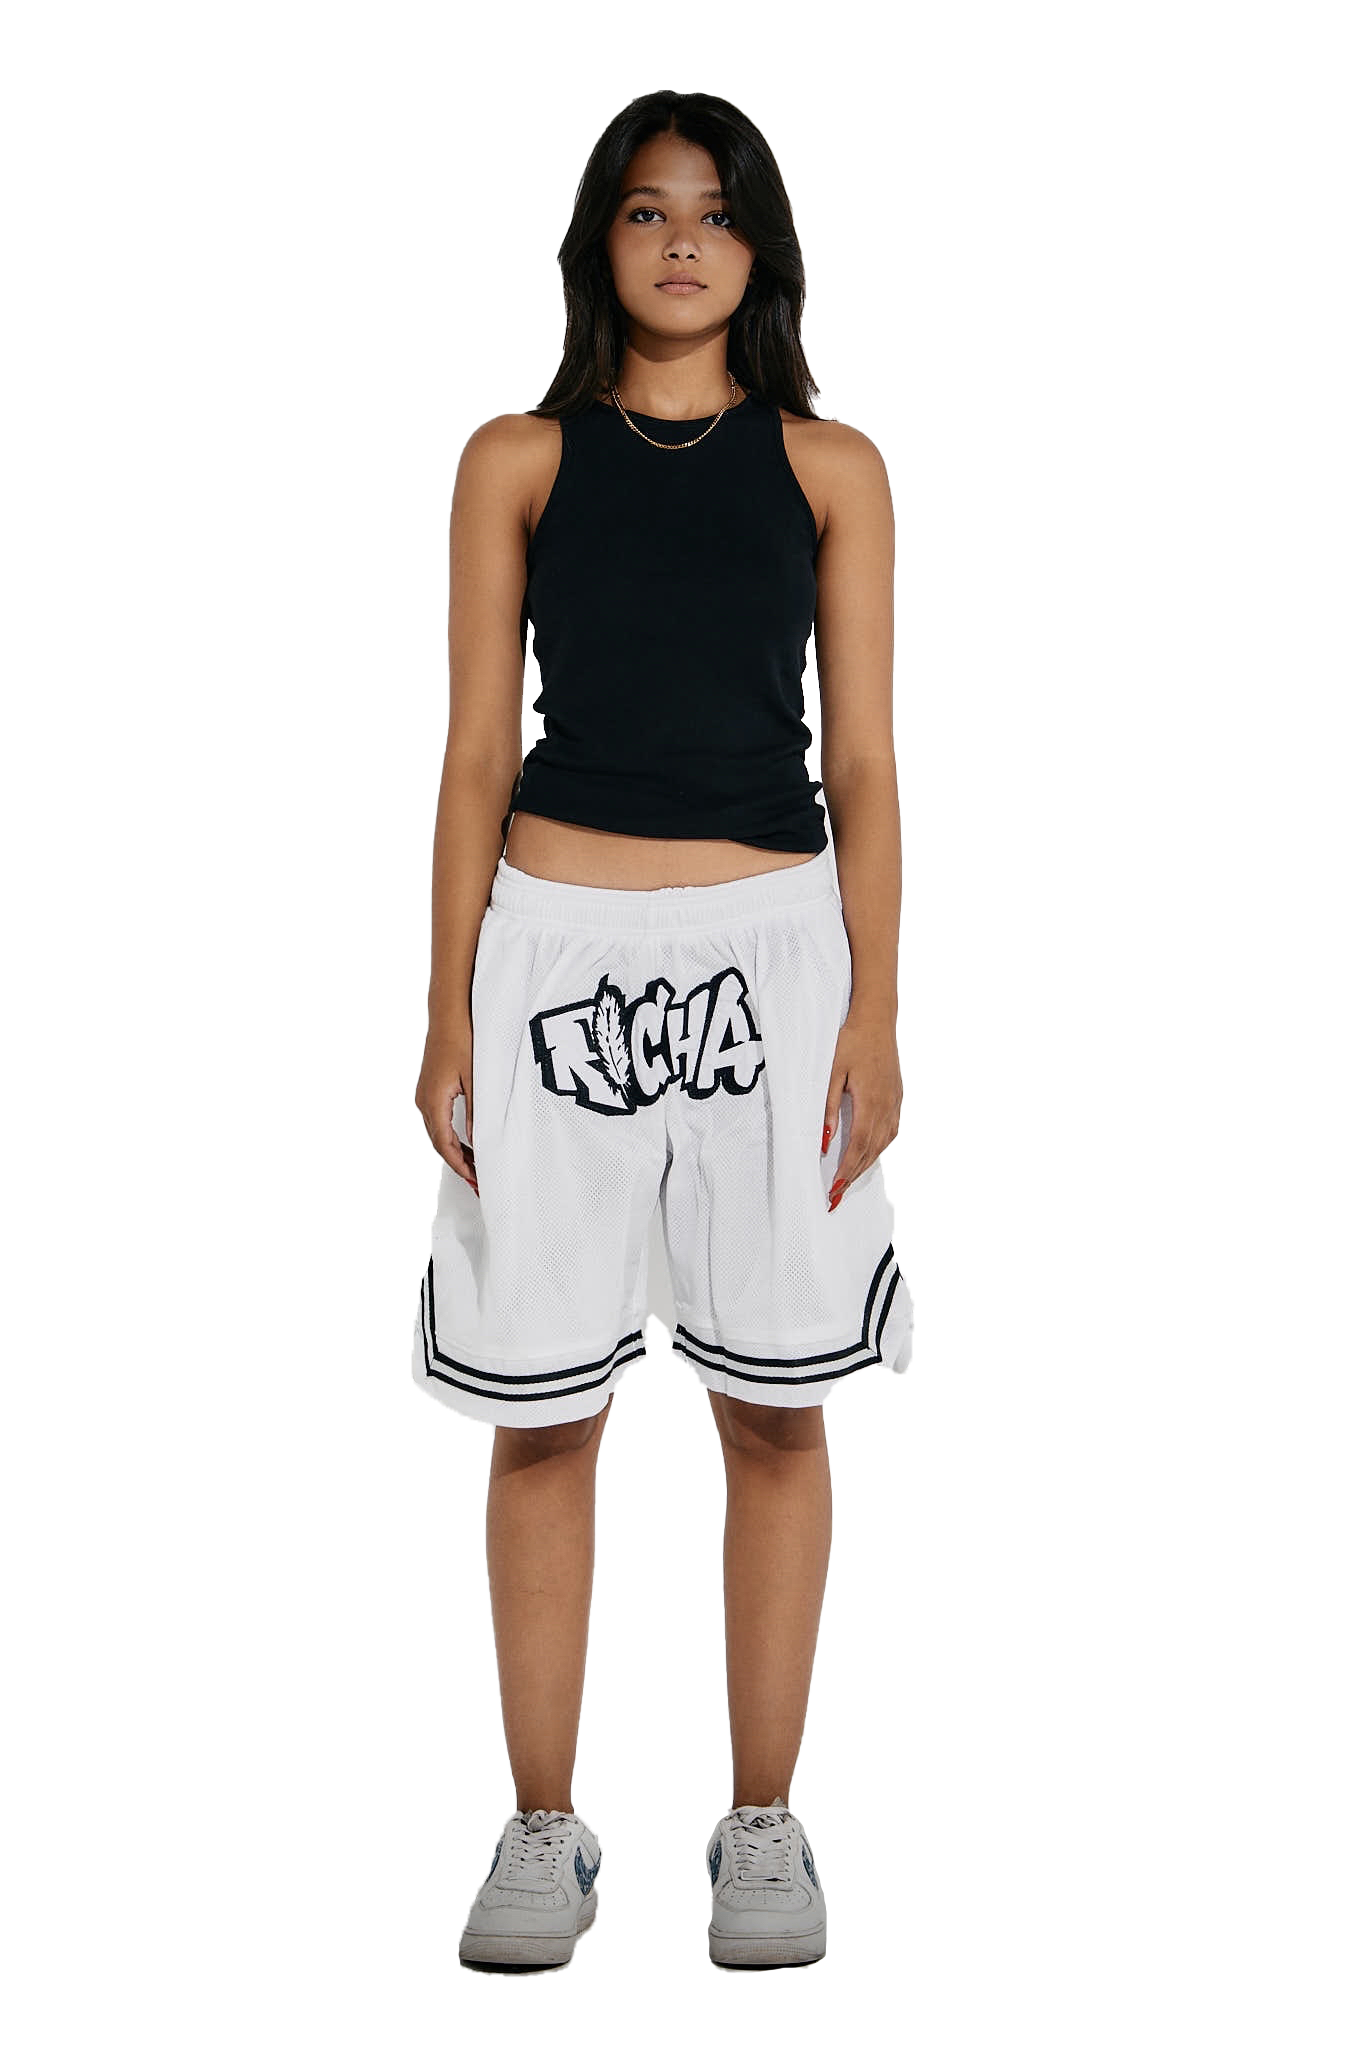 White Basketball Shorts